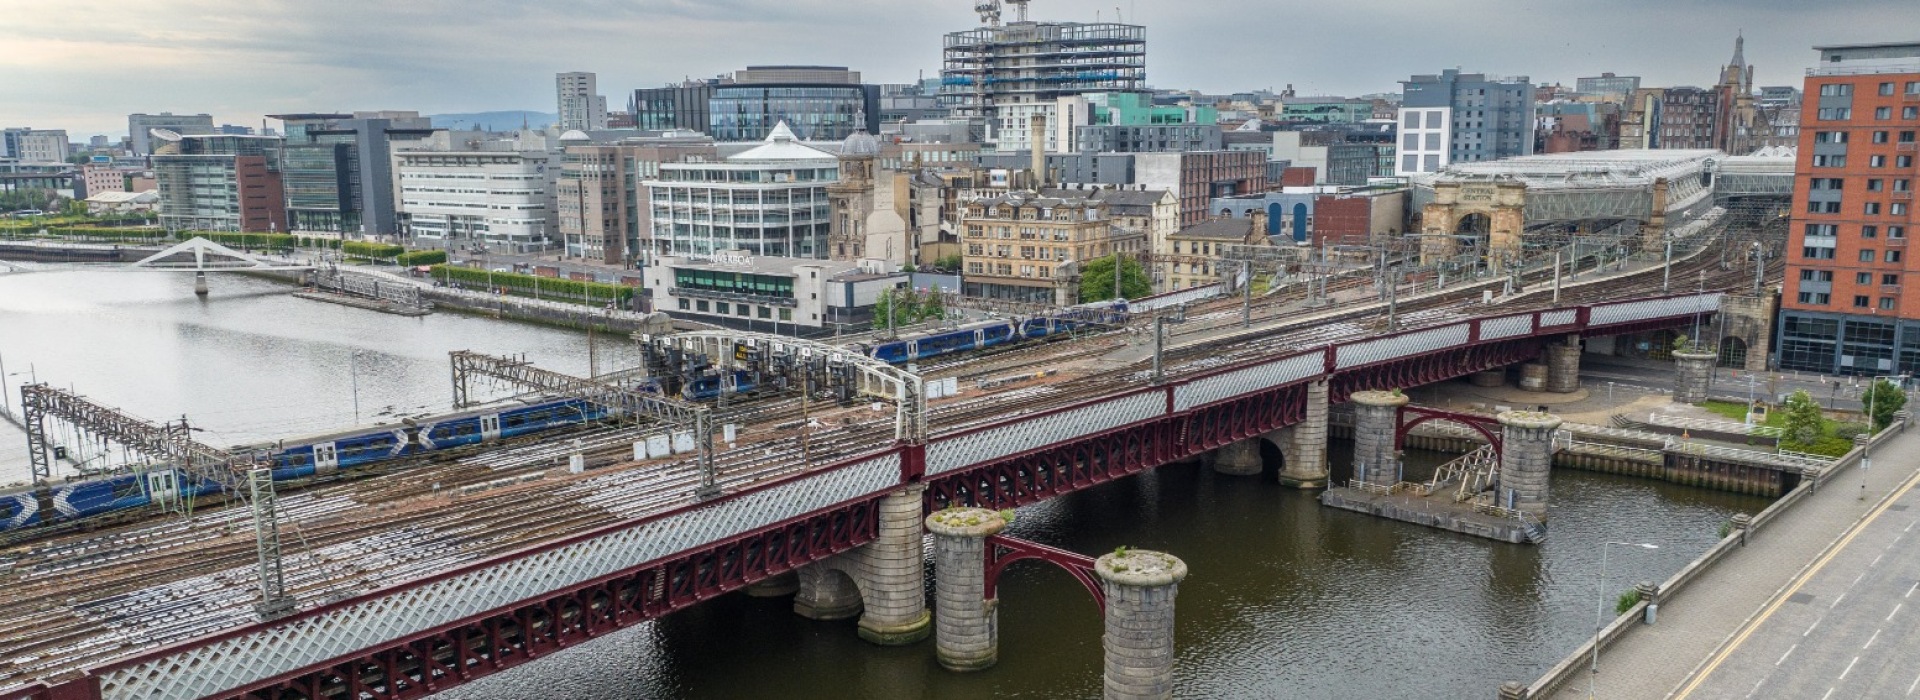 New Clyde Bridge, Glasgow